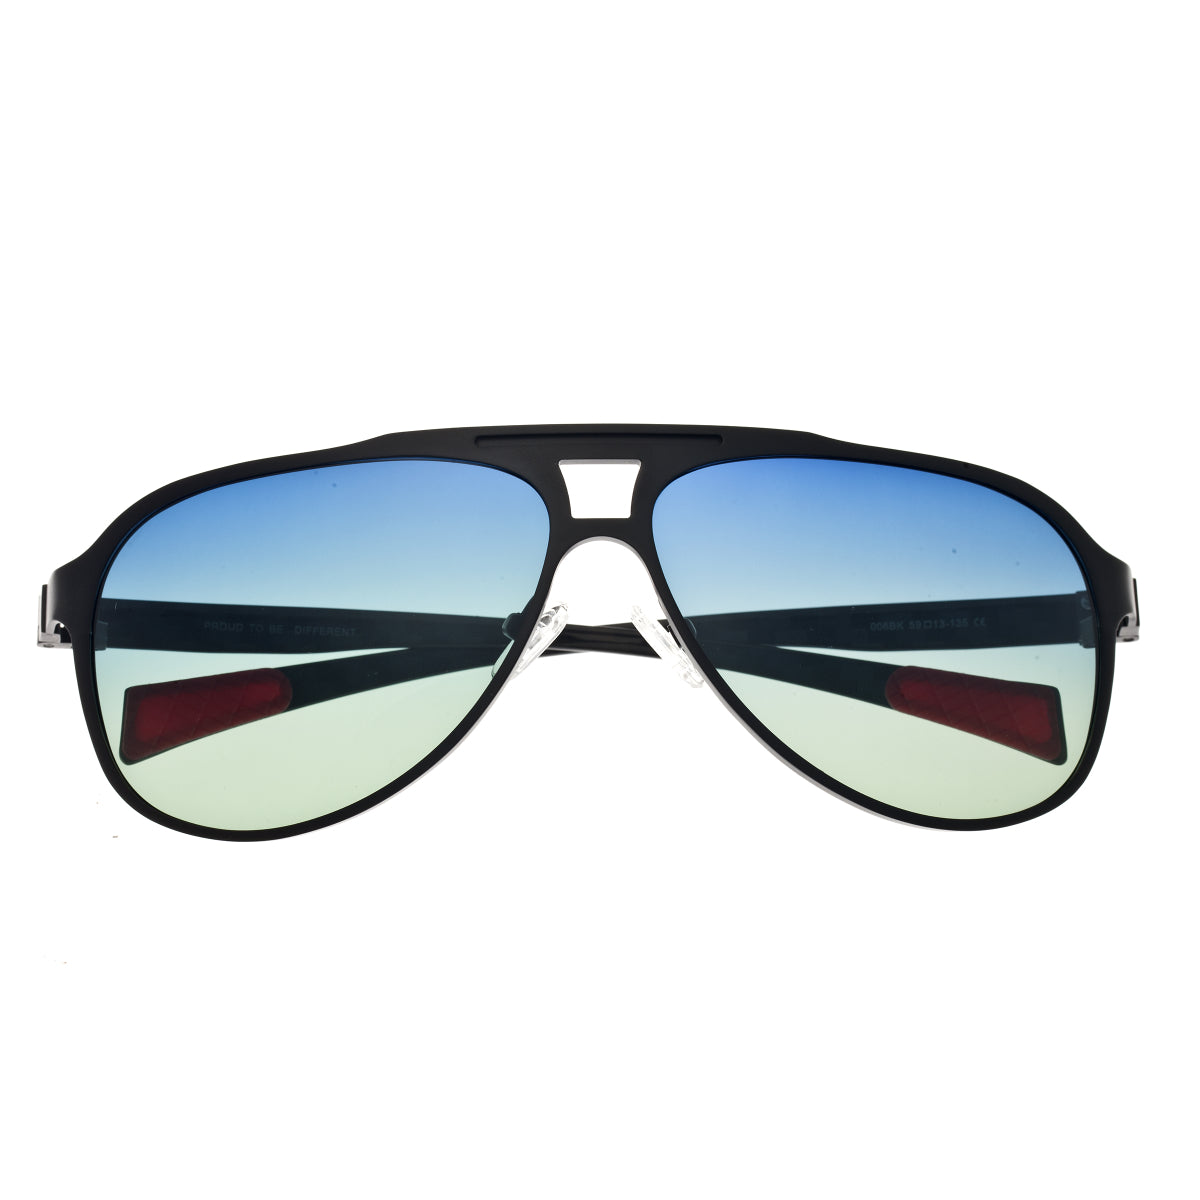 Breed Apollo Titanium and Carbon Fiber Polarized Sunglasses - Black/Blue - BSG006BK